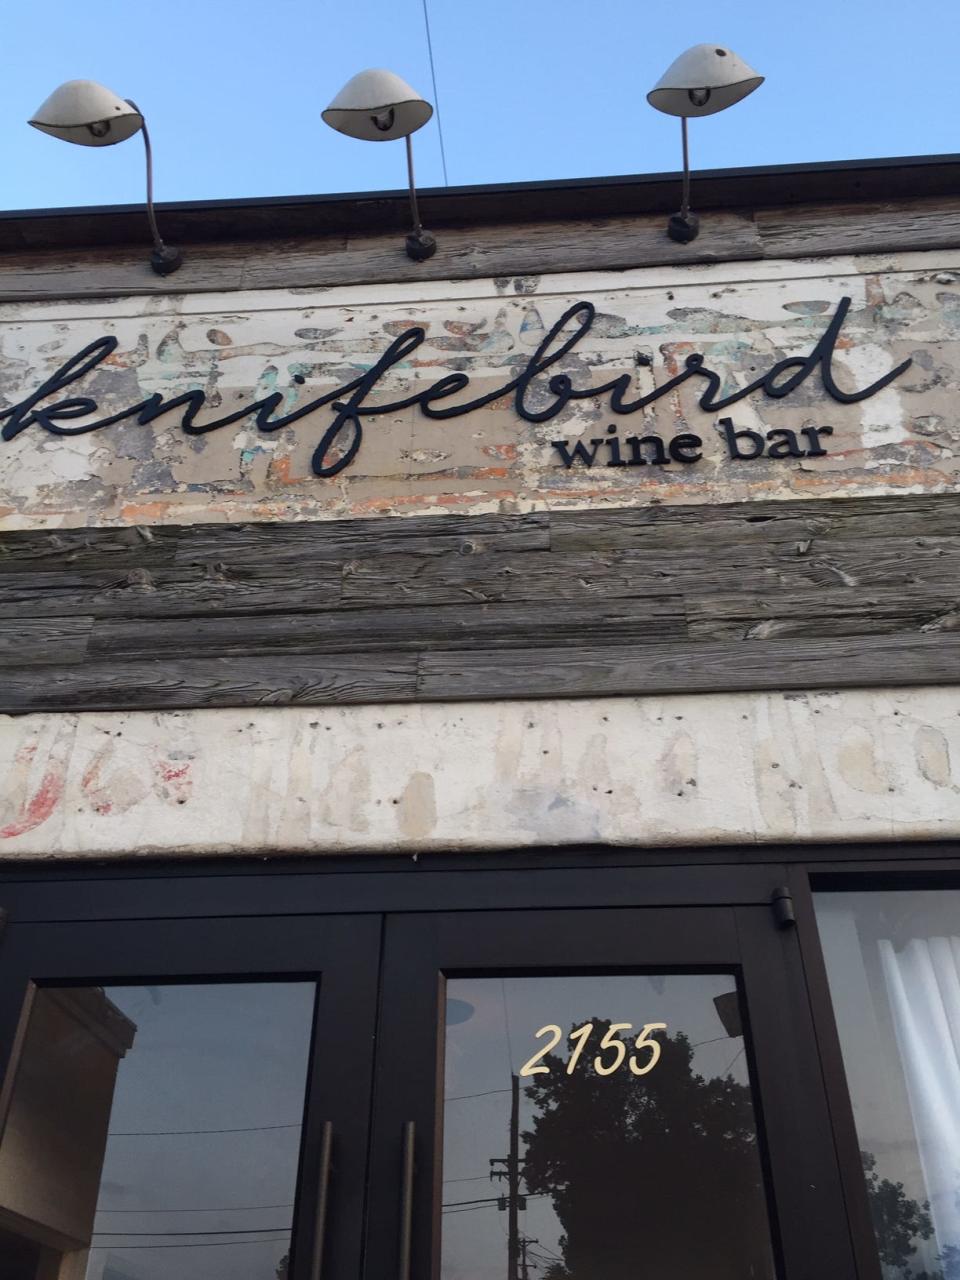 Knifebird is a wine bar in Midtown Memphis.